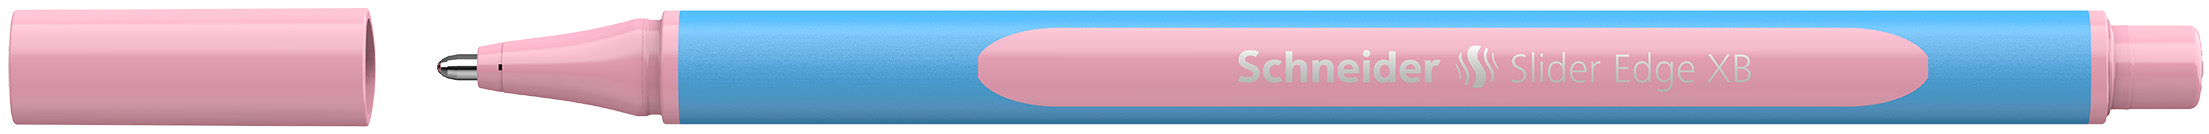 SCHNEIDER Stylo Slider Edge 0.7mm 004384-229 pastel rose